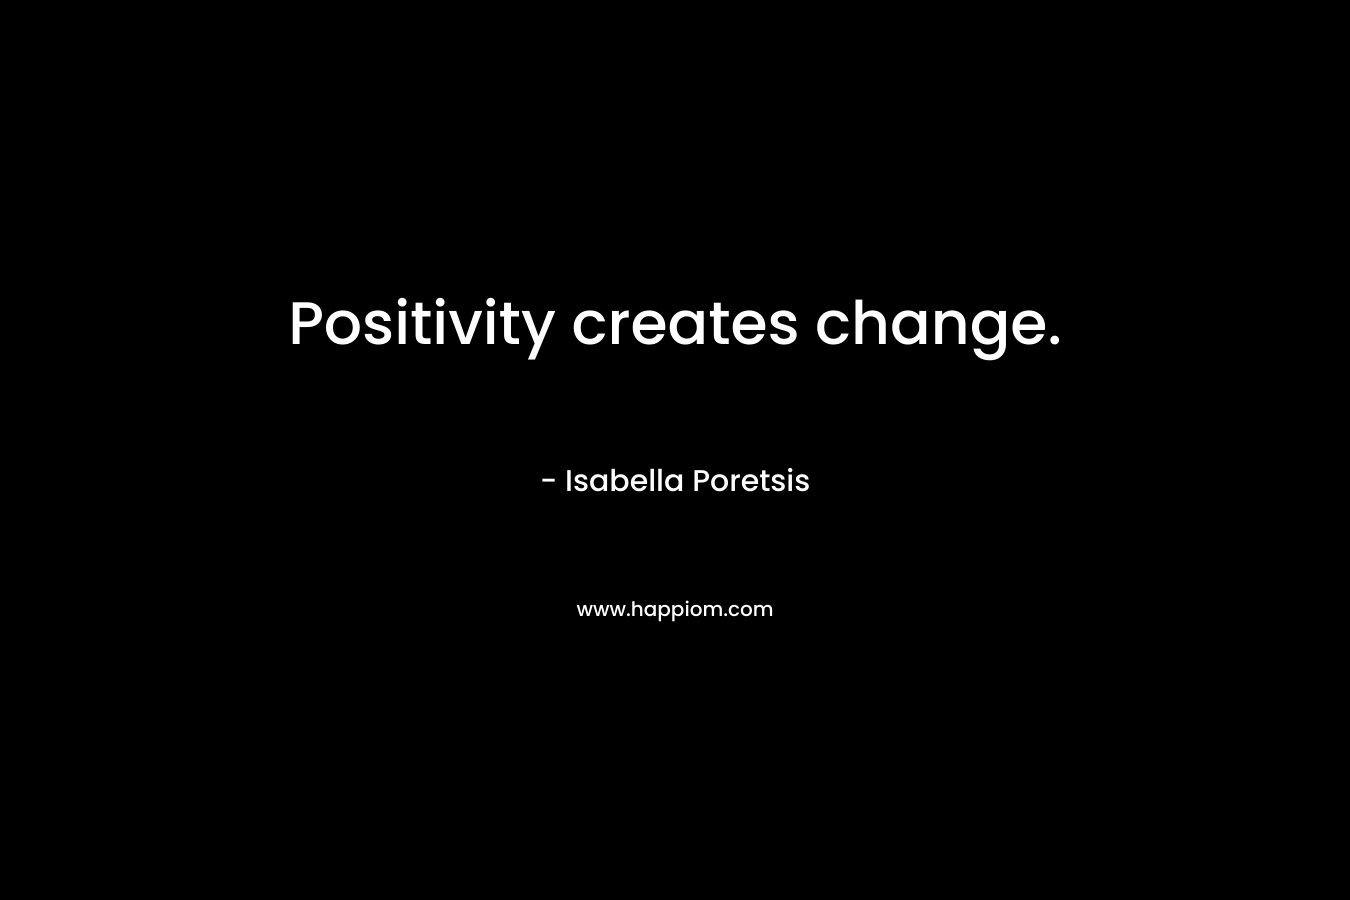 Positivity creates change.